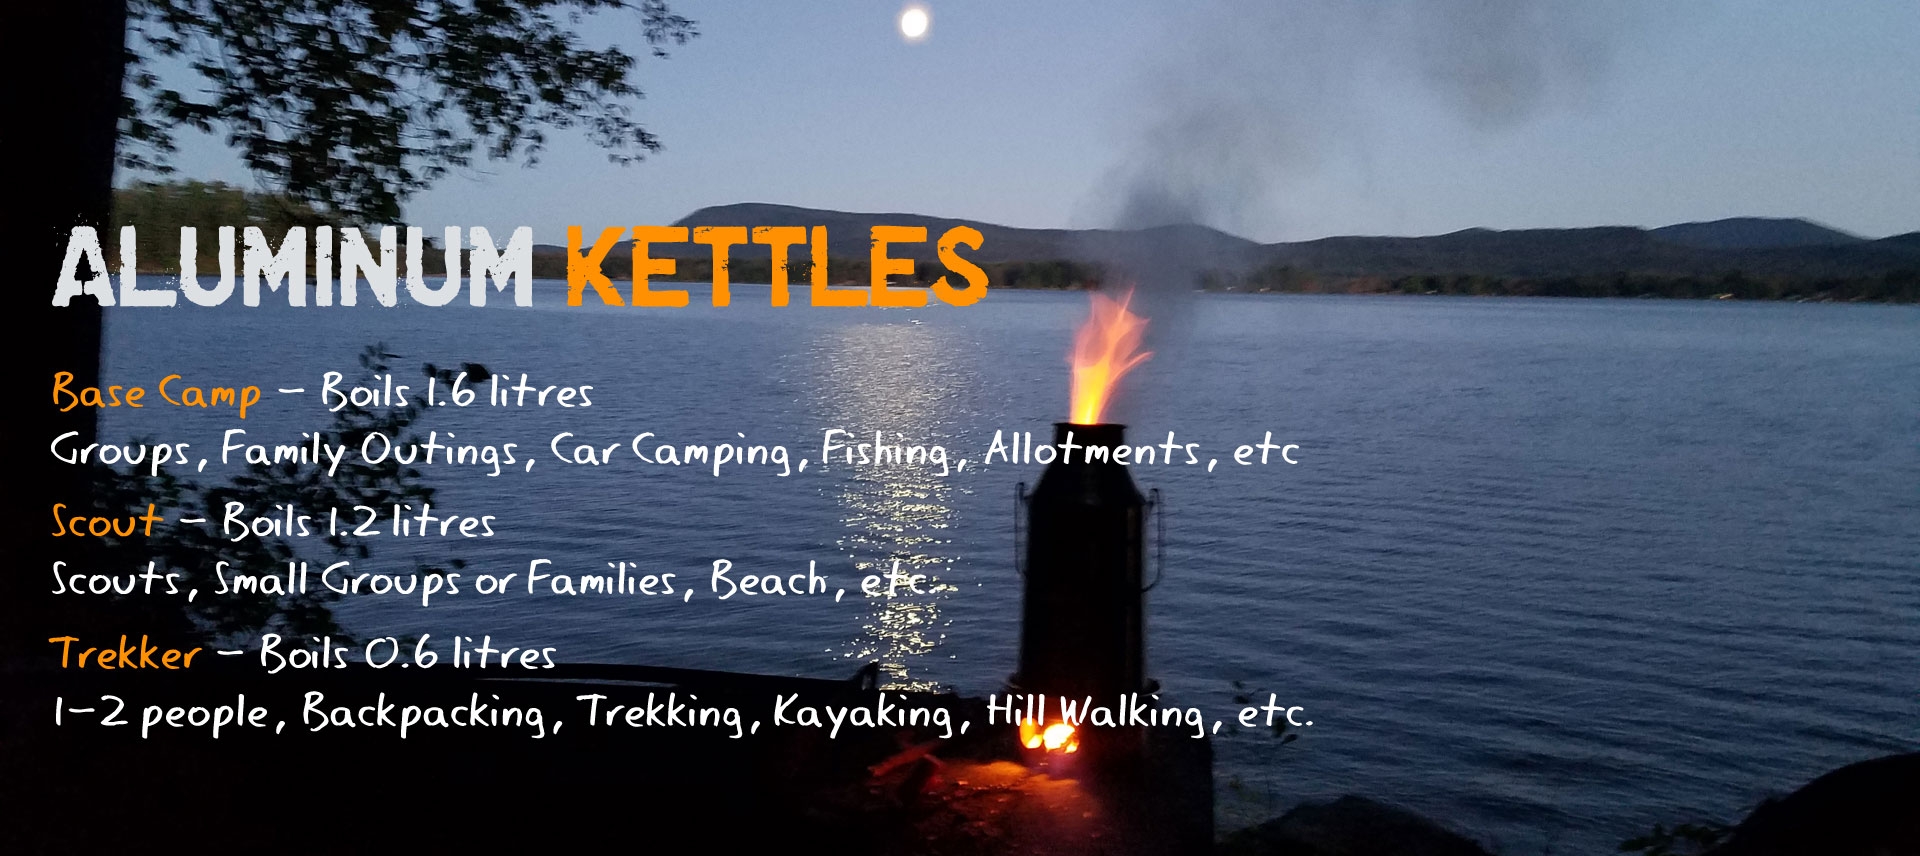 https://www.kellykettle.com/media/catalog/category/Aluminium-Kettles_1.jpg